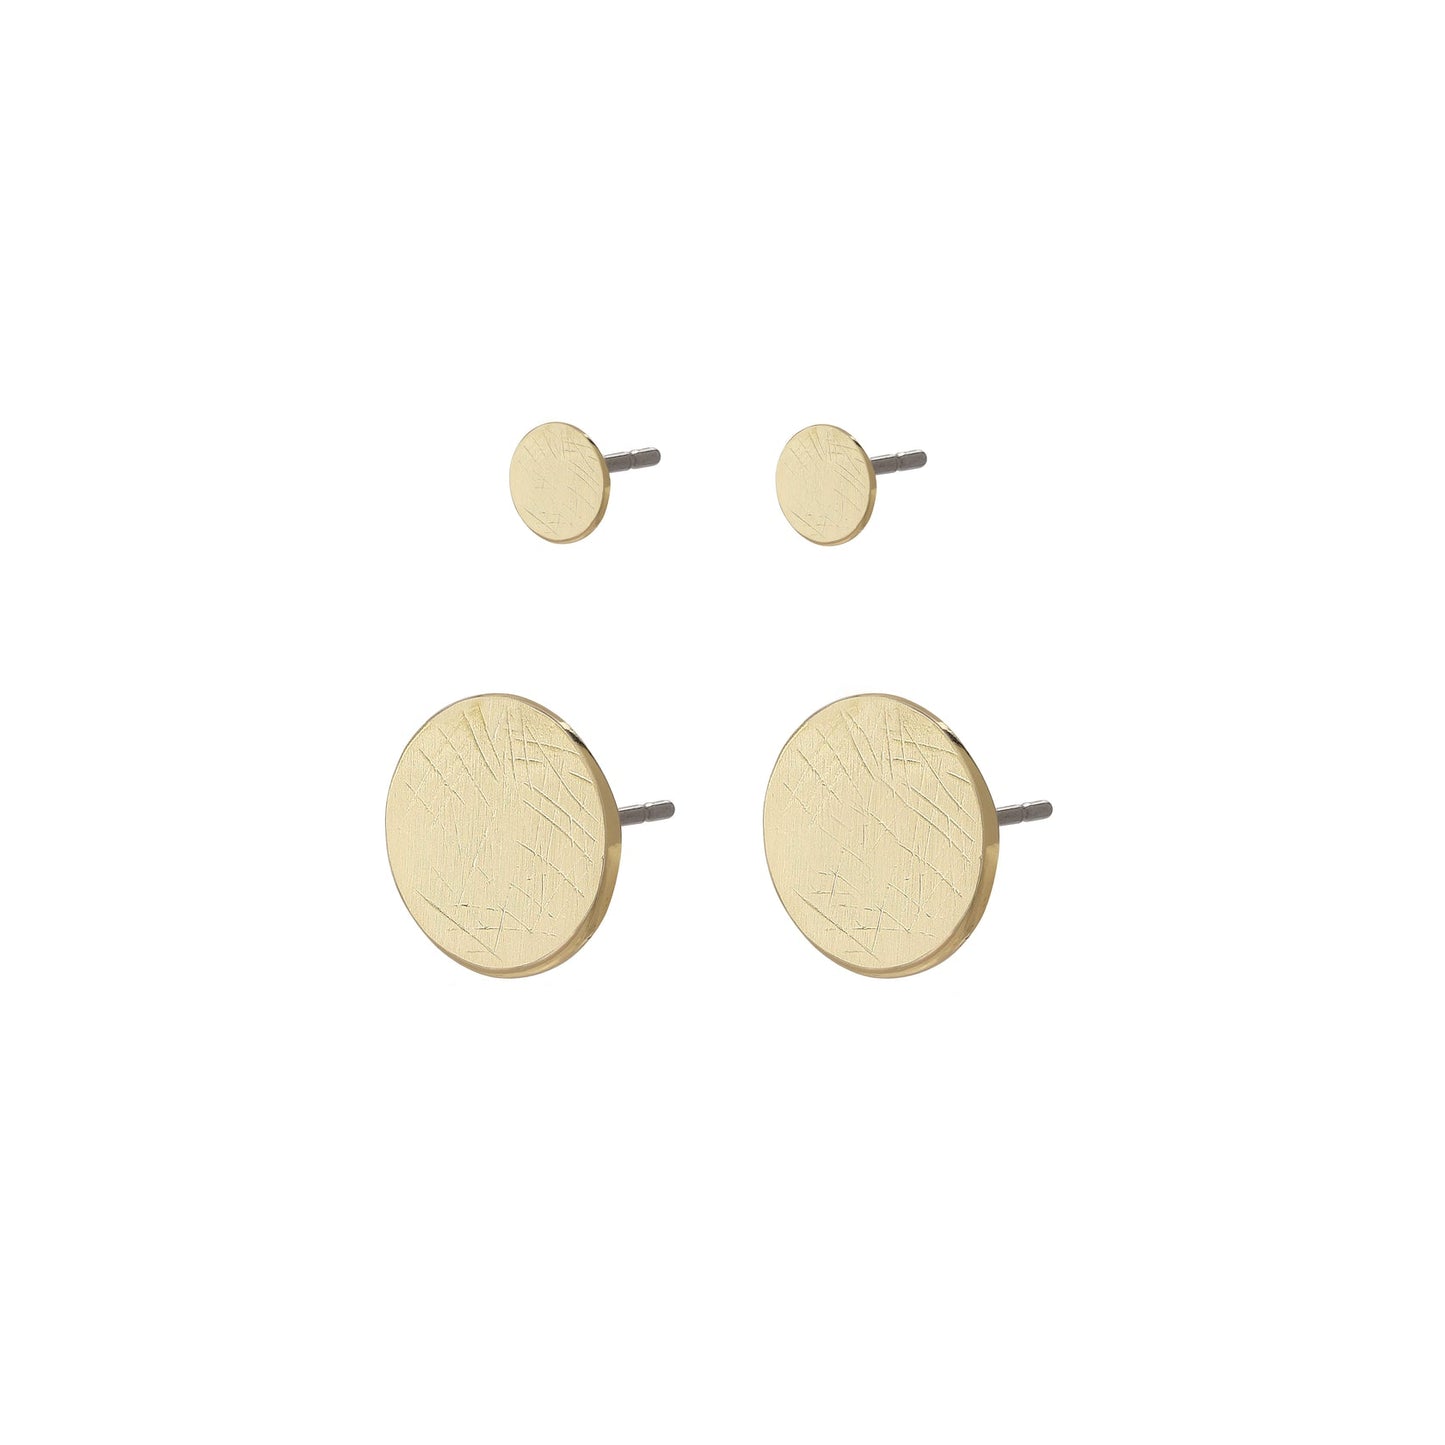 JACY earrings set / GOLD PLATED